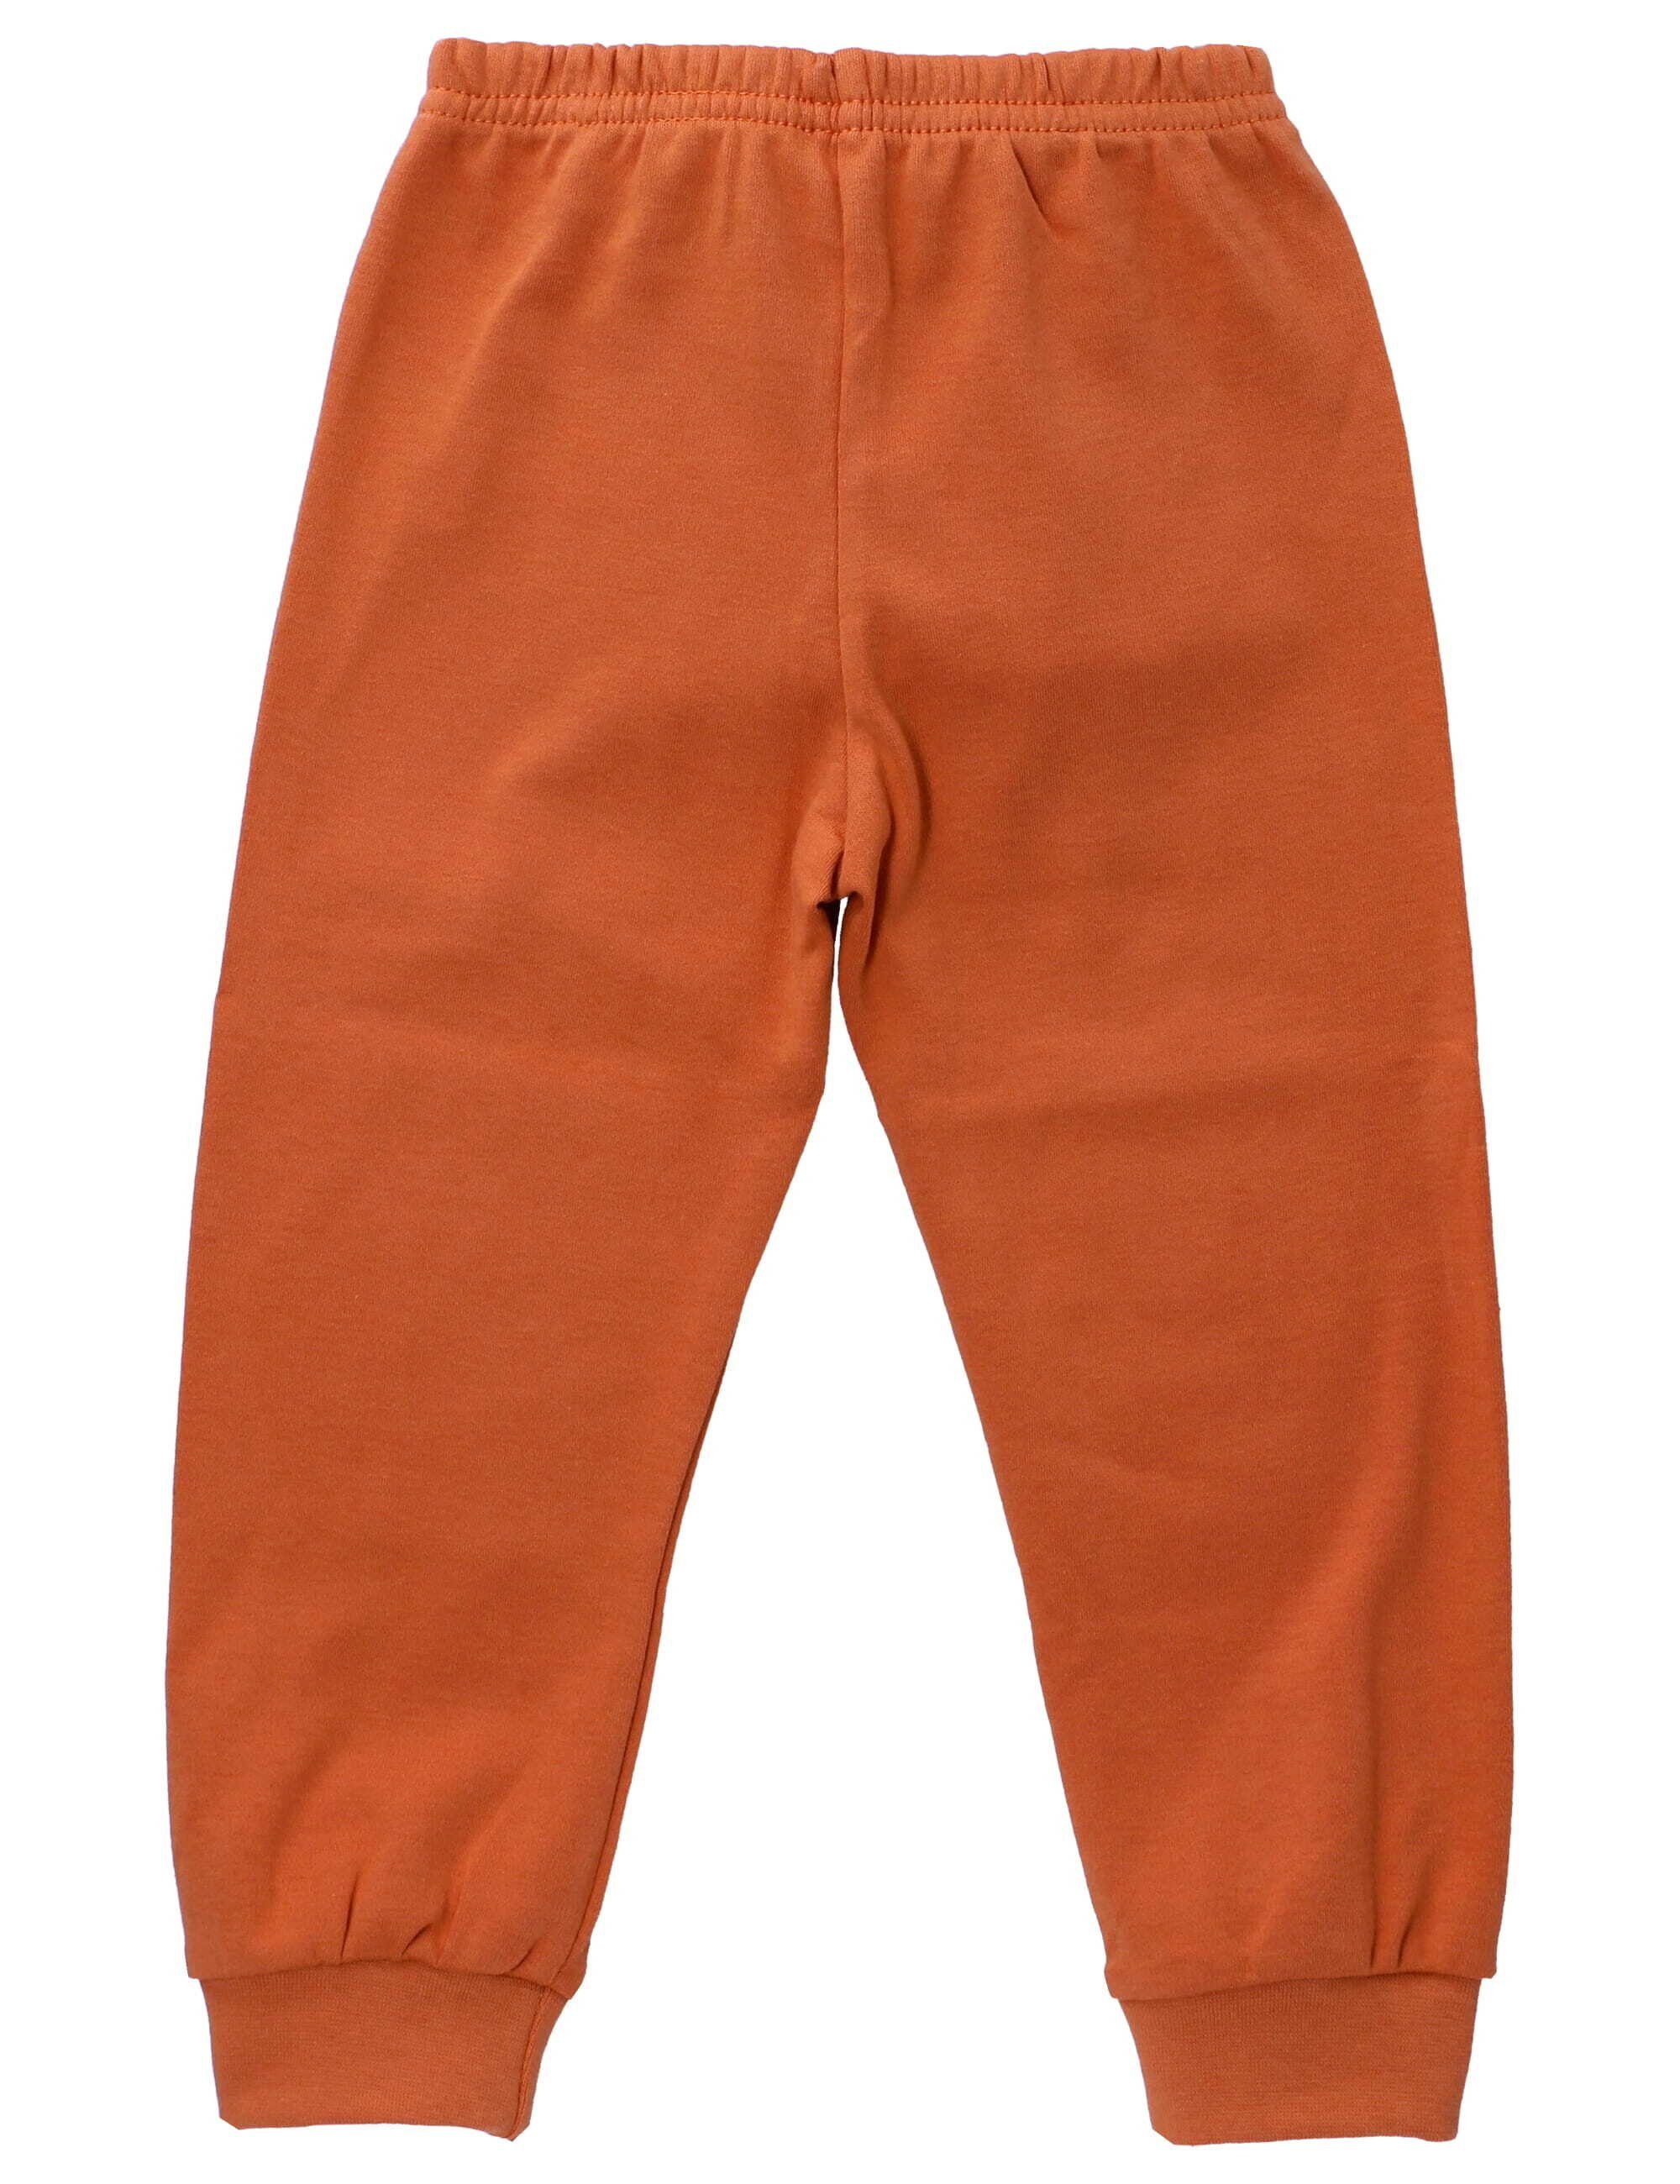 Sweets orange (1 Set Baby Schlafanzug tlg) grau Waldtiere